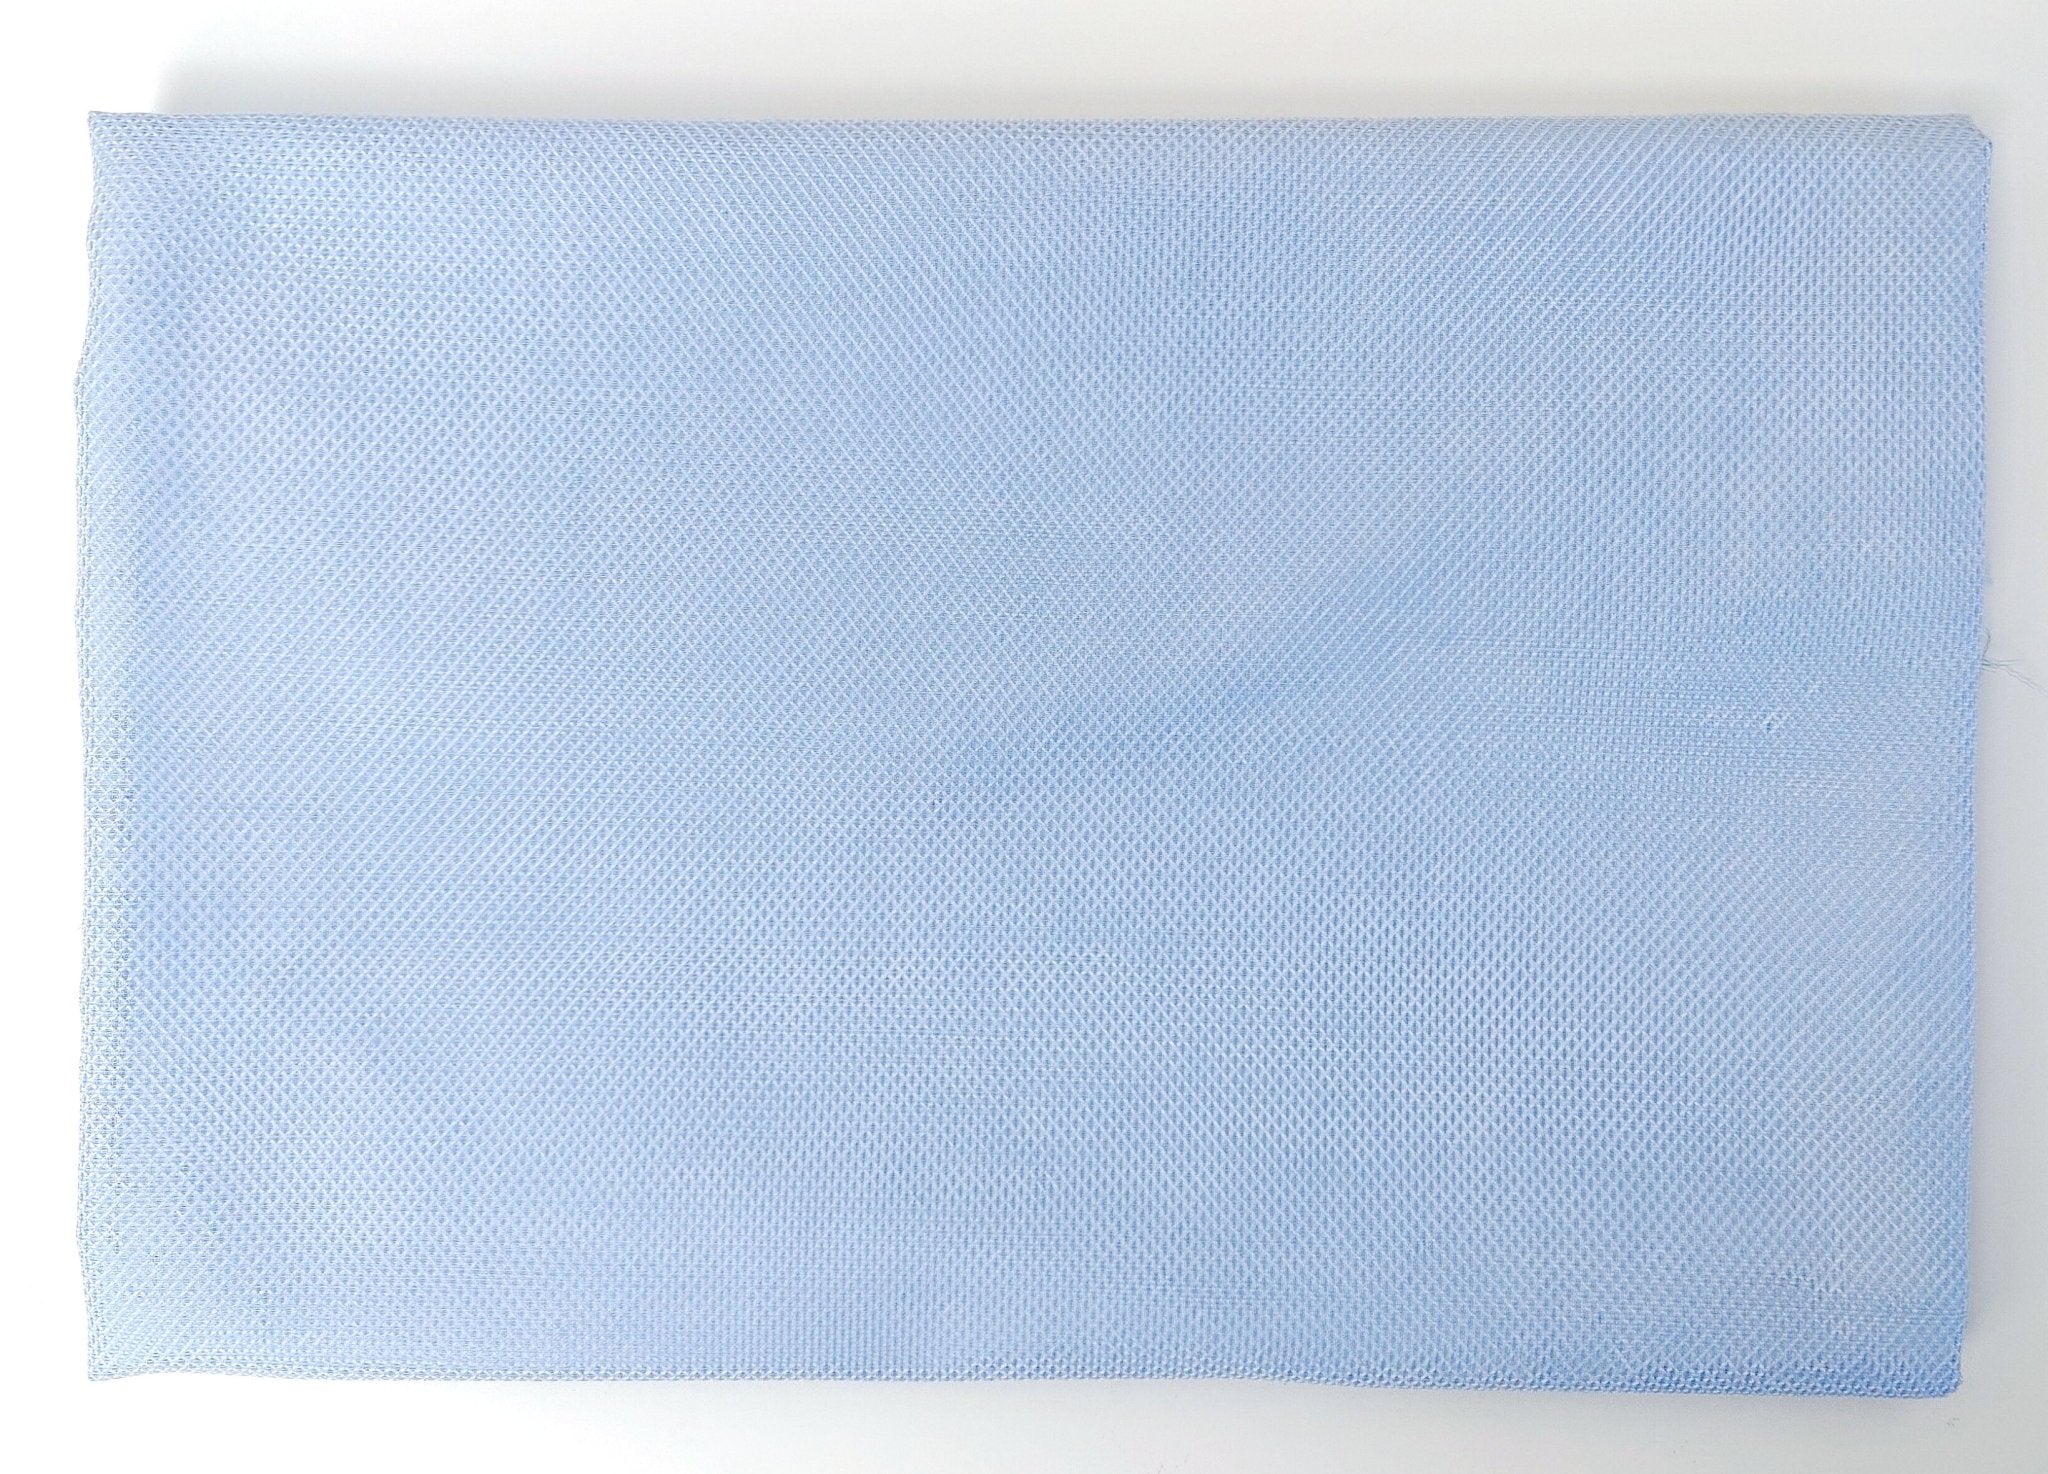 Linen Cotton Rhombus Shape Fabric - Special V-Heald 4350 4349 4348 4347 - The Linen Lab - Blue (light)